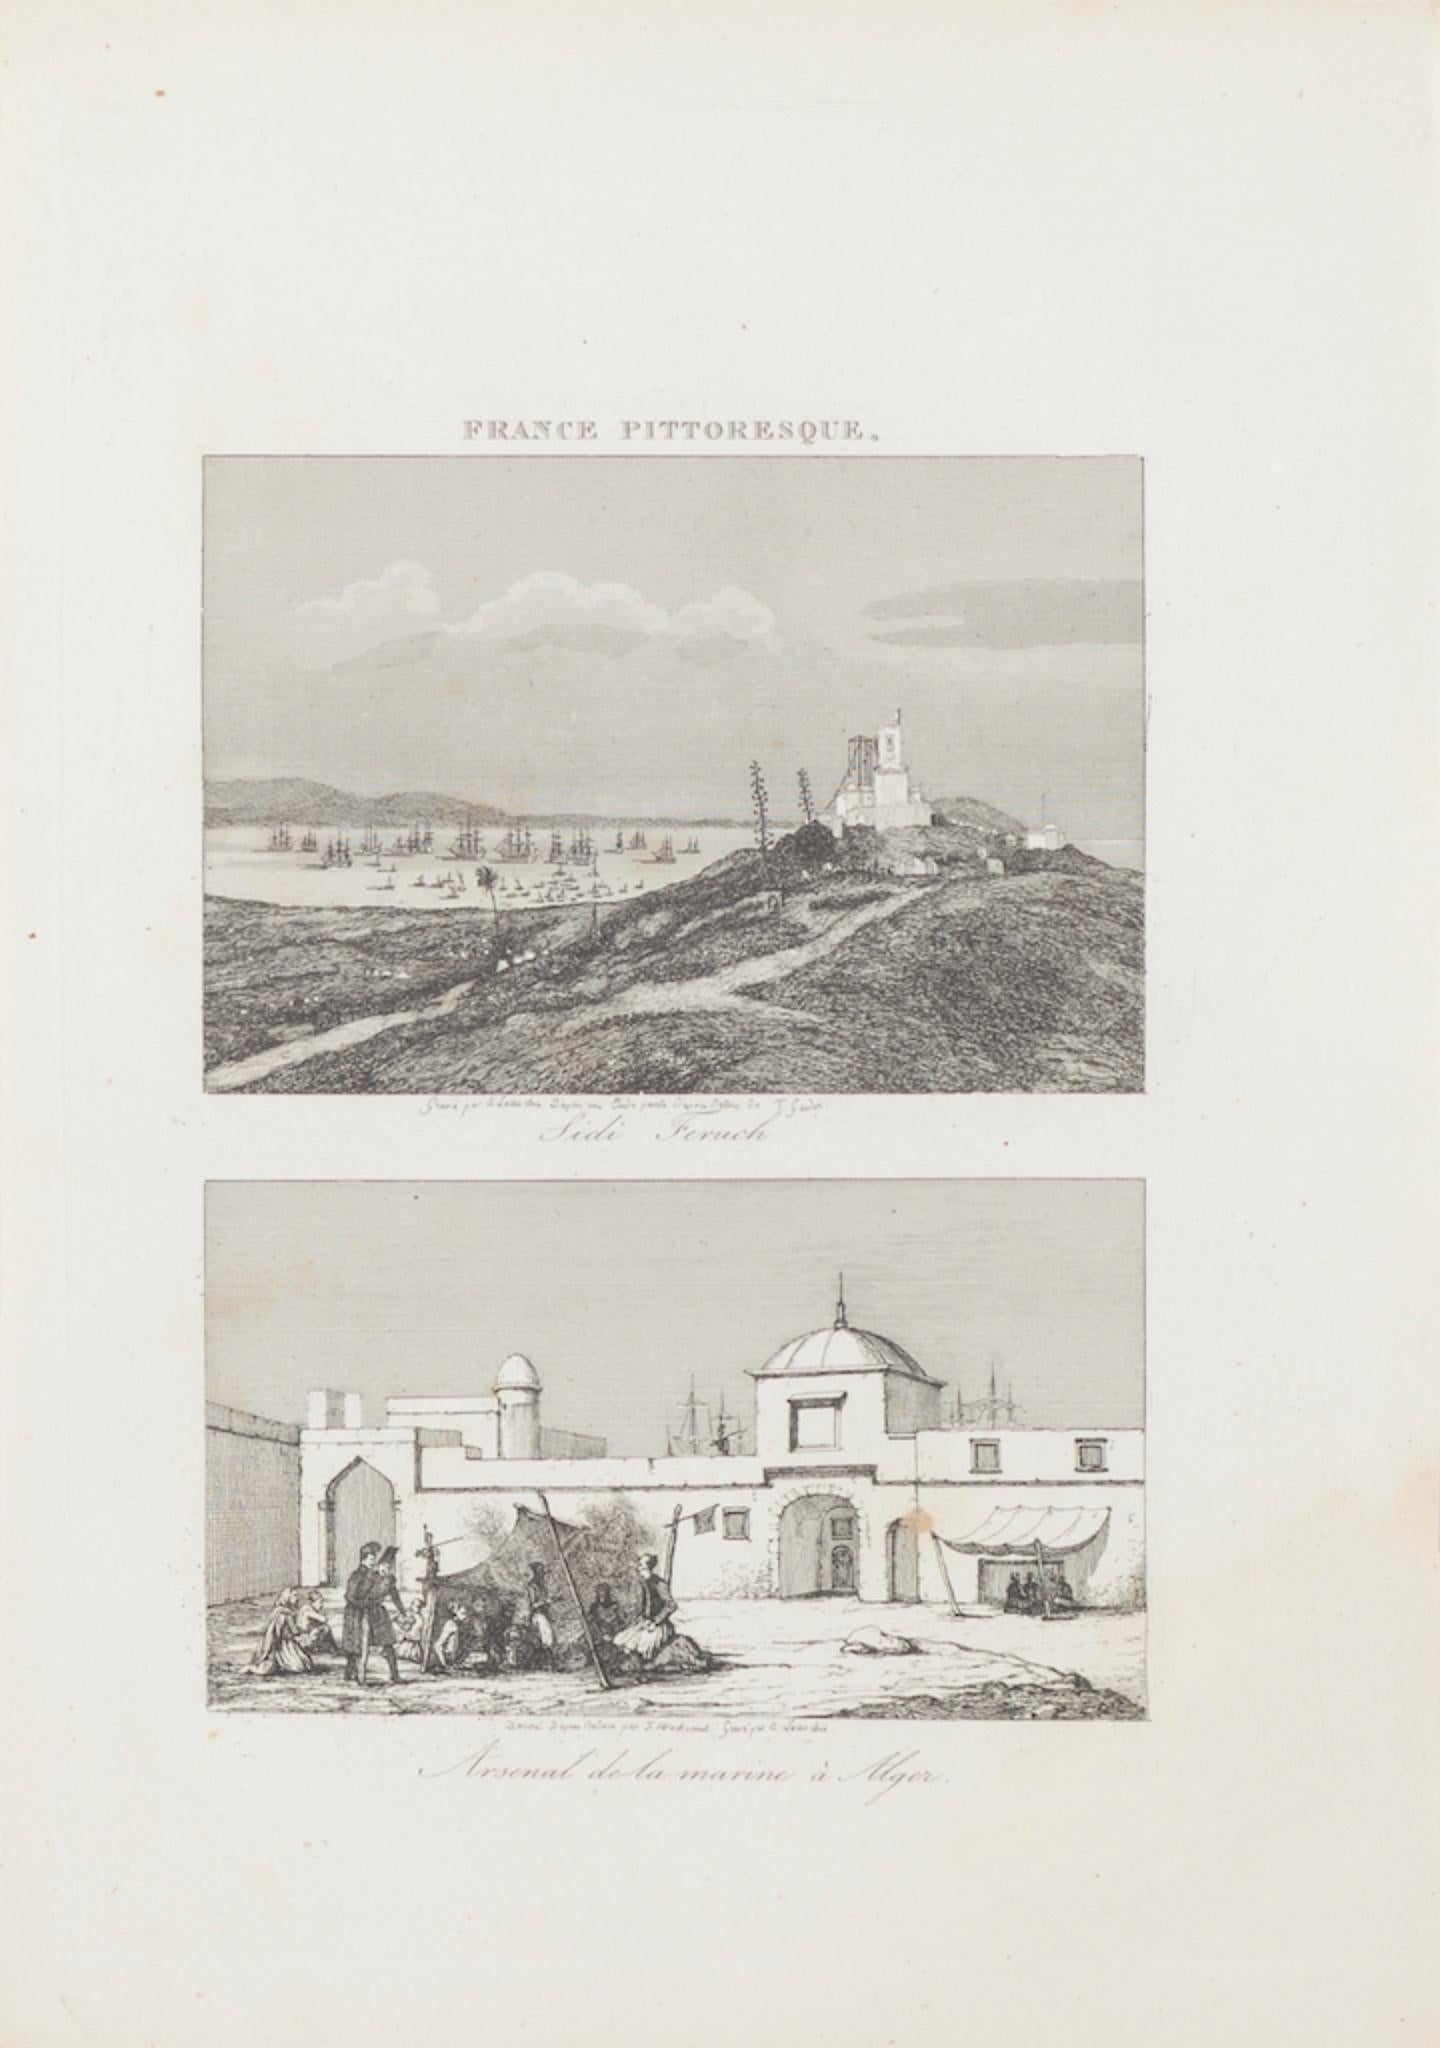 Unknown Landscape Print - Sidi French and Arsenal d'Algier - Original Lithograph - 19th century